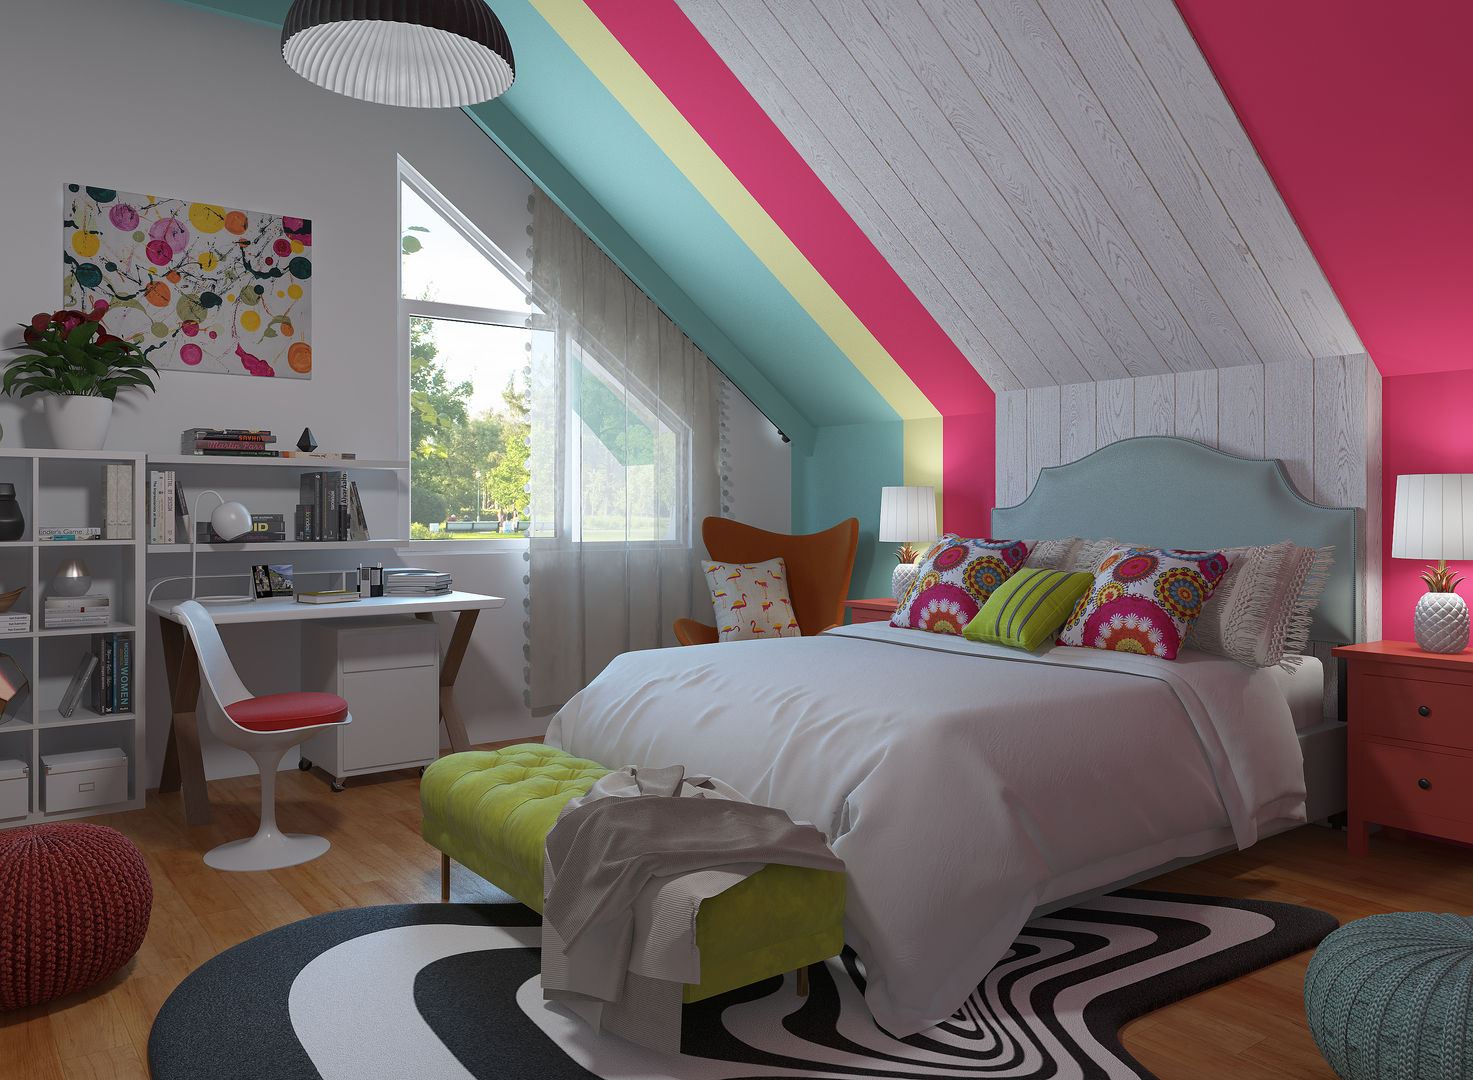 Eclectic -Pop Art decoration homify Eklektik Yatak Odası bedroom,decorate bedroom,how to decorate,pop art style,pop art bedroom,3d design,interior design,rendering,home deco,colourful,customized designs